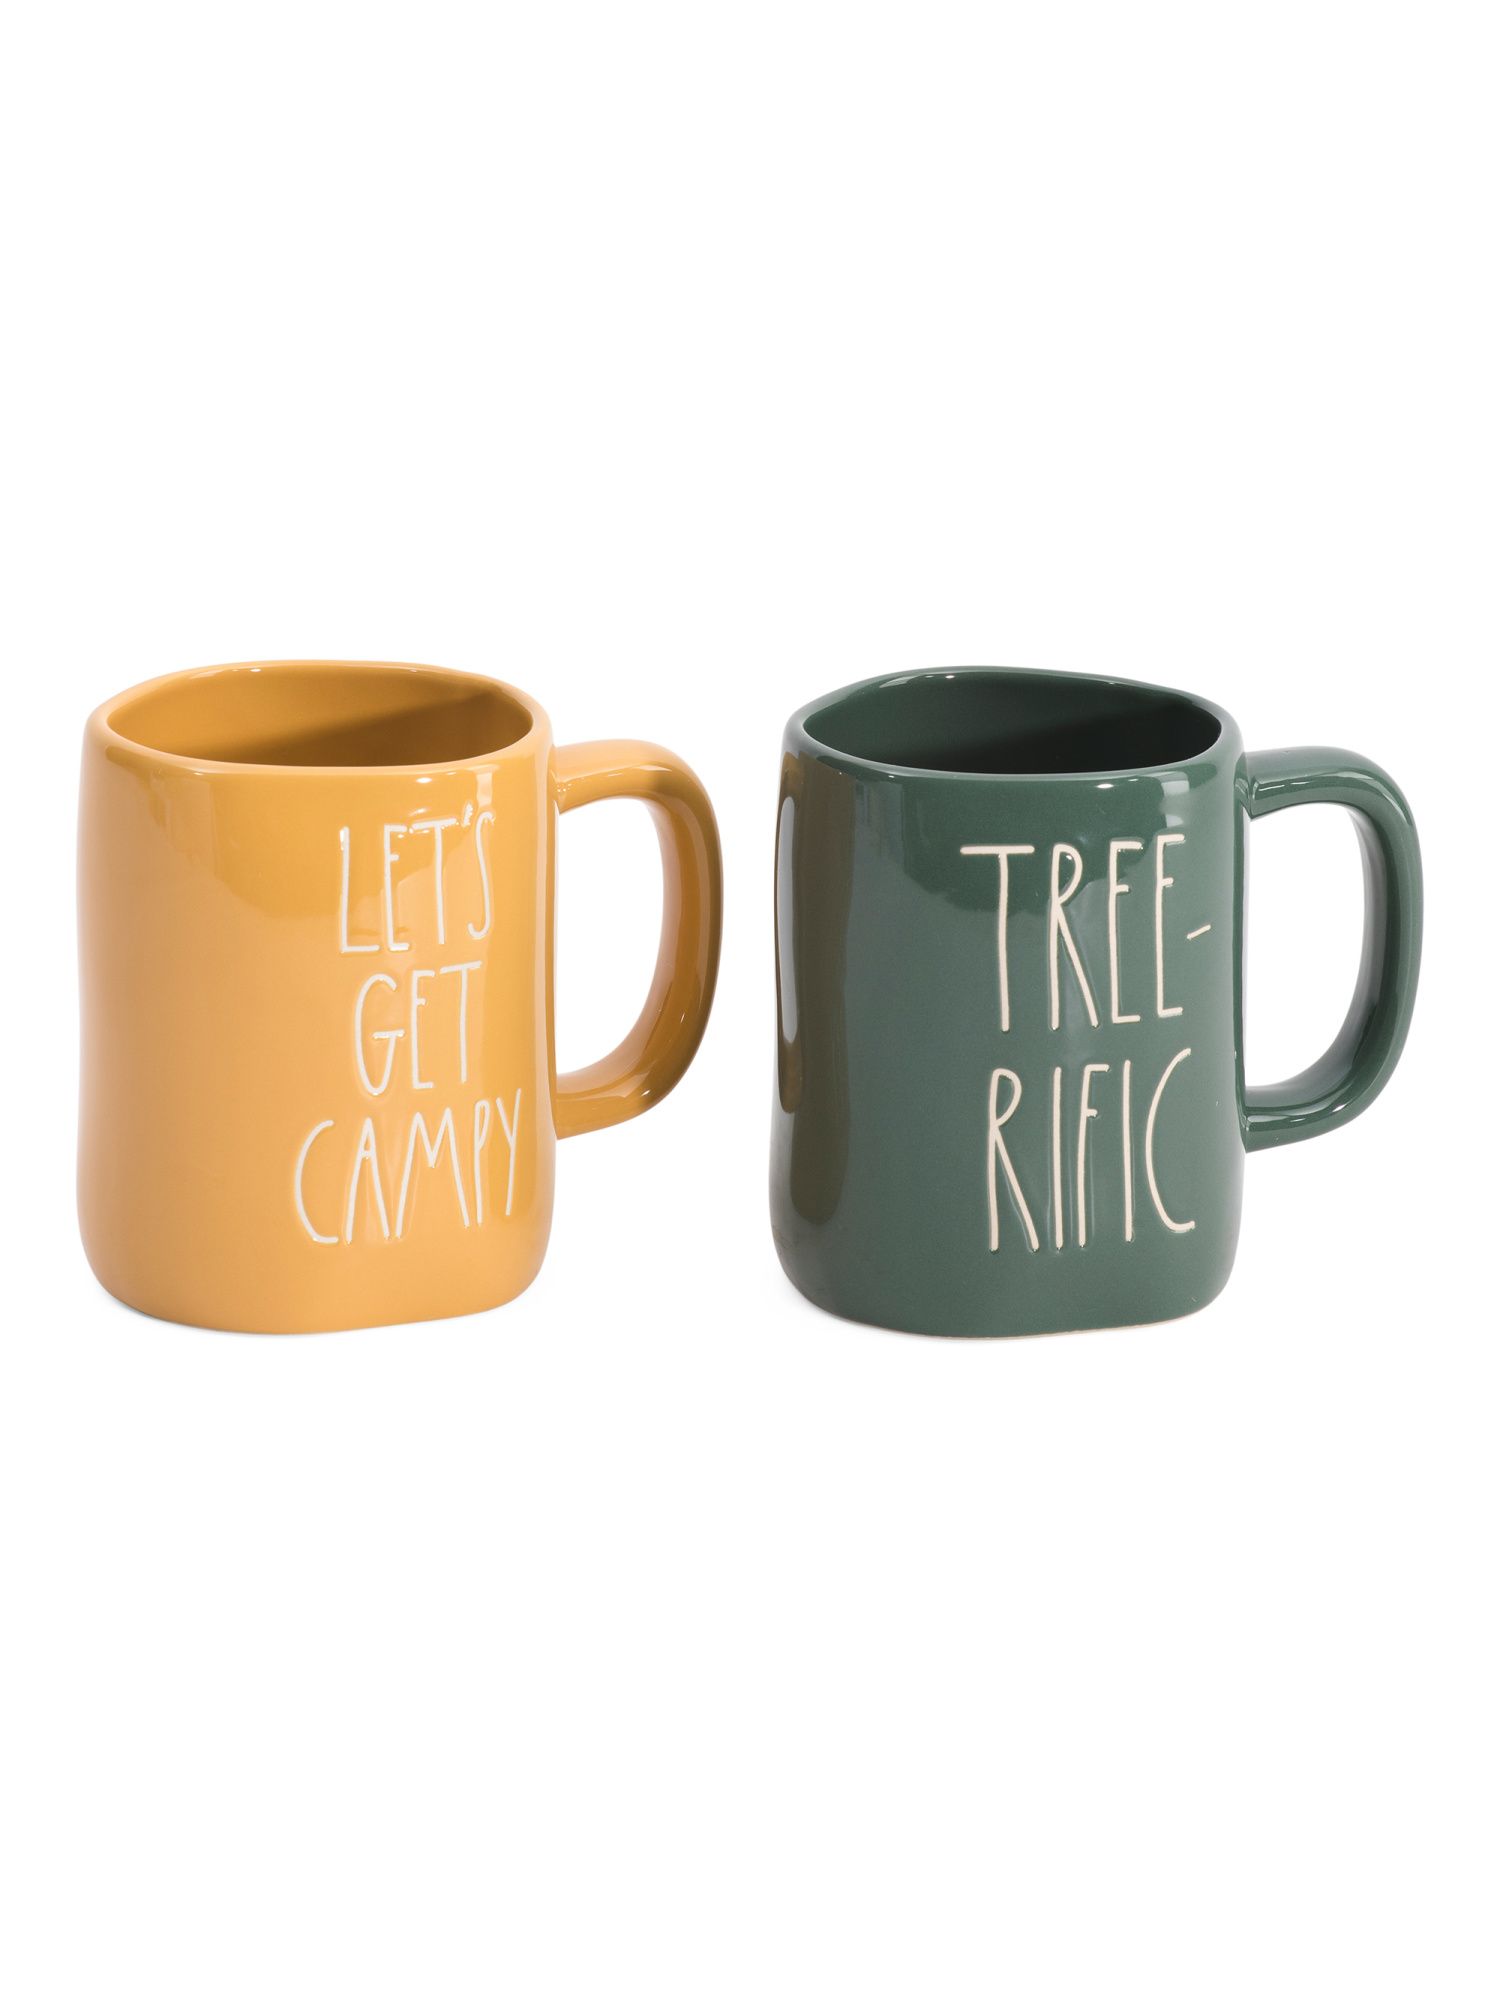 2pk Campy Tree Mugs Set | TJ Maxx